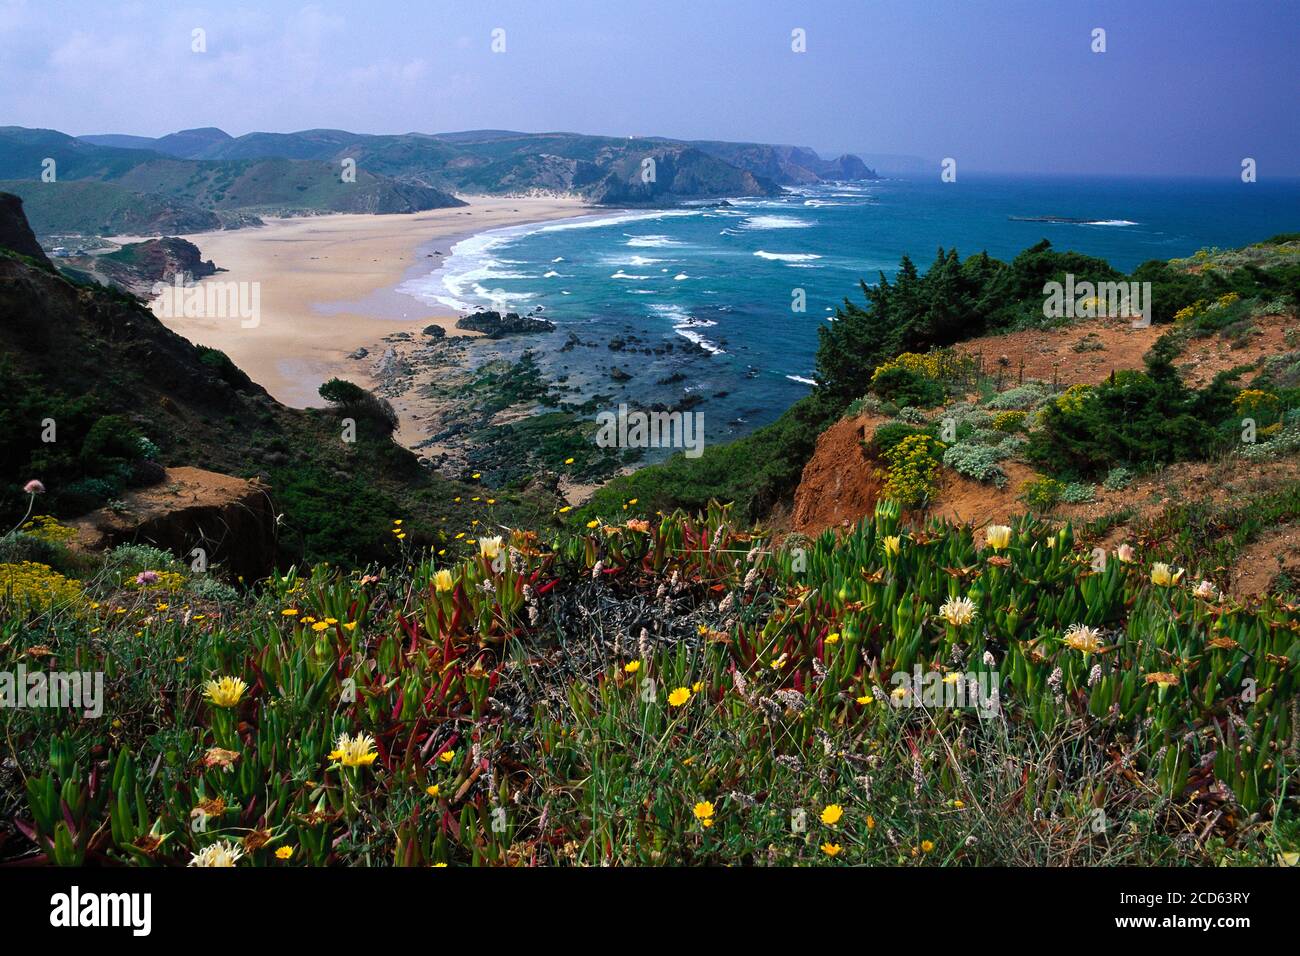 Landscape with coastline, beach and plants, Almada, Setubal District, Portugal Stock Photo